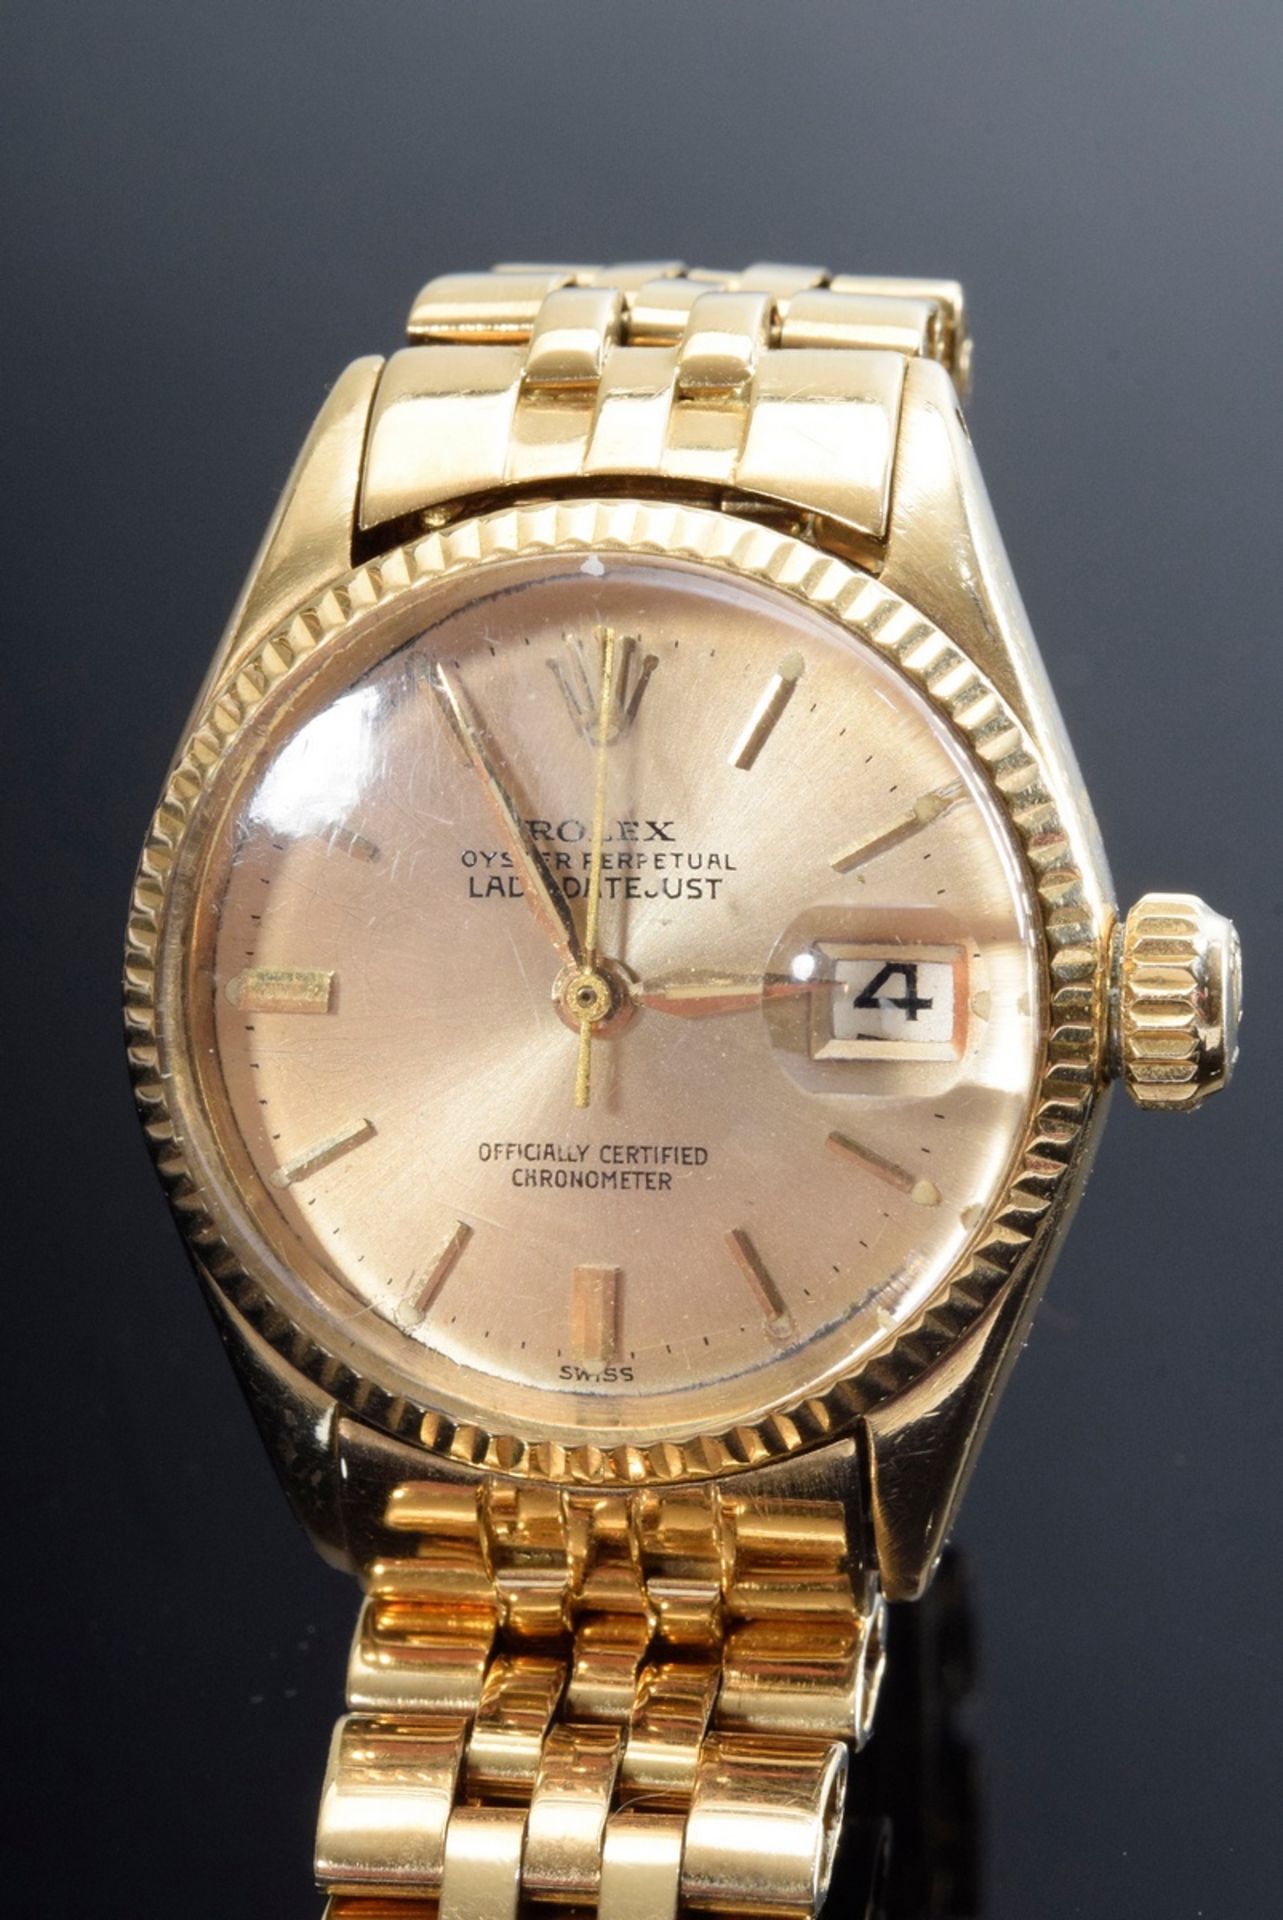 GG 750 Rolex "Oyster Perpetual, Lady Datejust" Armbanduhr mit Jubilé-Band, Automatic, Strichindizes - Bild 2 aus 5